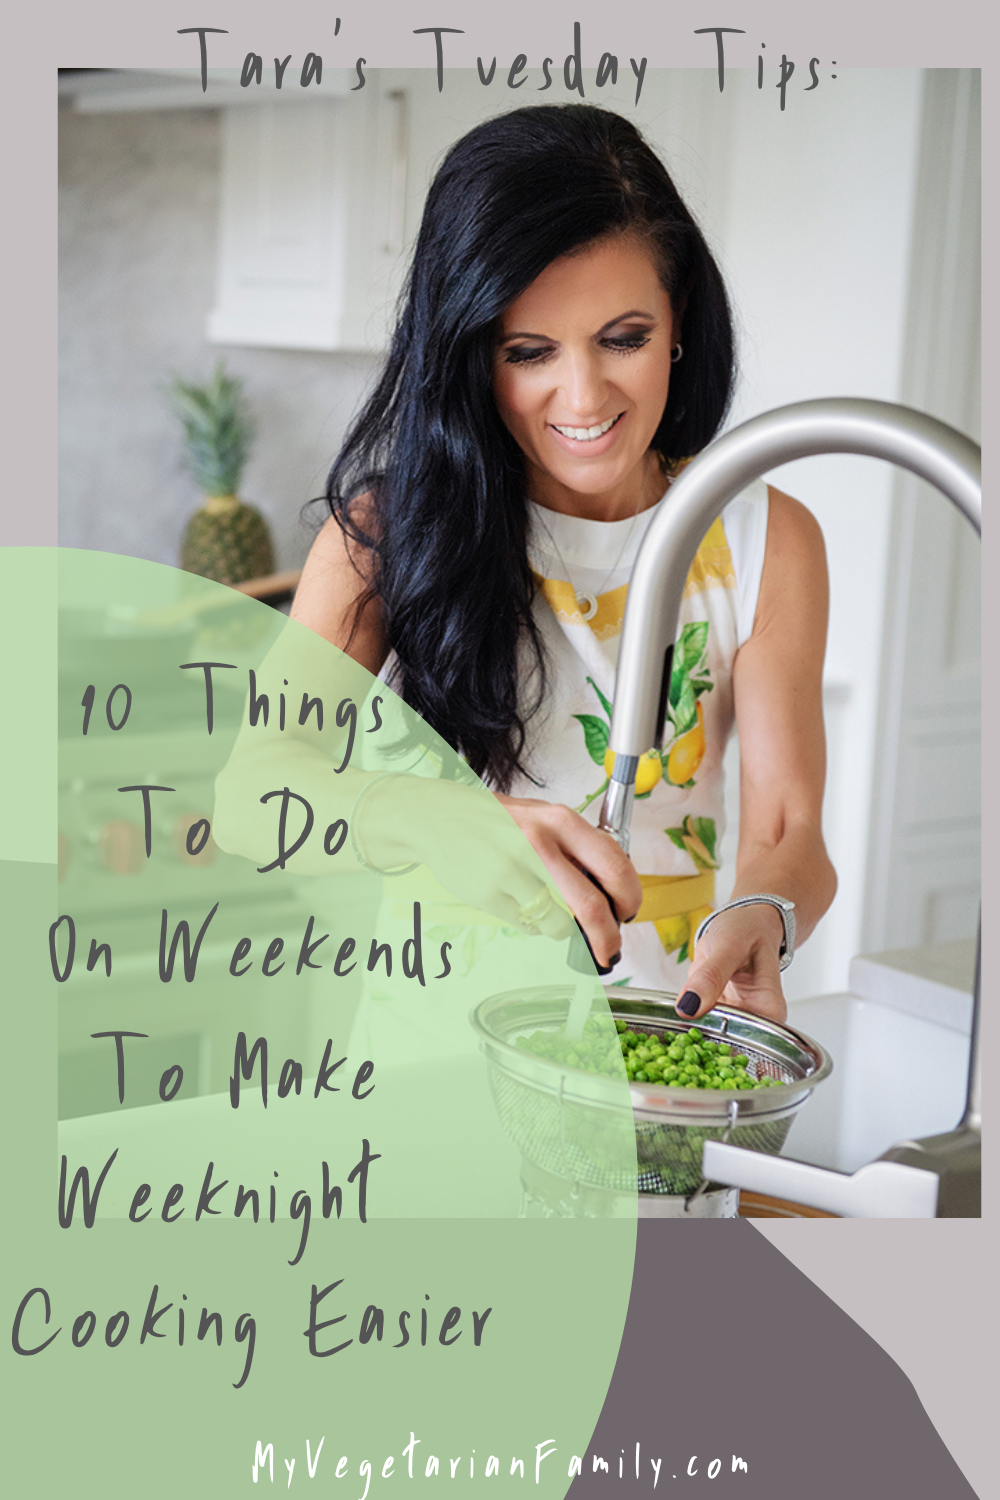 10 Things To Do On Weekends To Make Weeknight Cooking Easier | Tara's Tuesday Tips | My Vegetarian Family #tarastuesdaytips #nutritiontips #veganmealprep